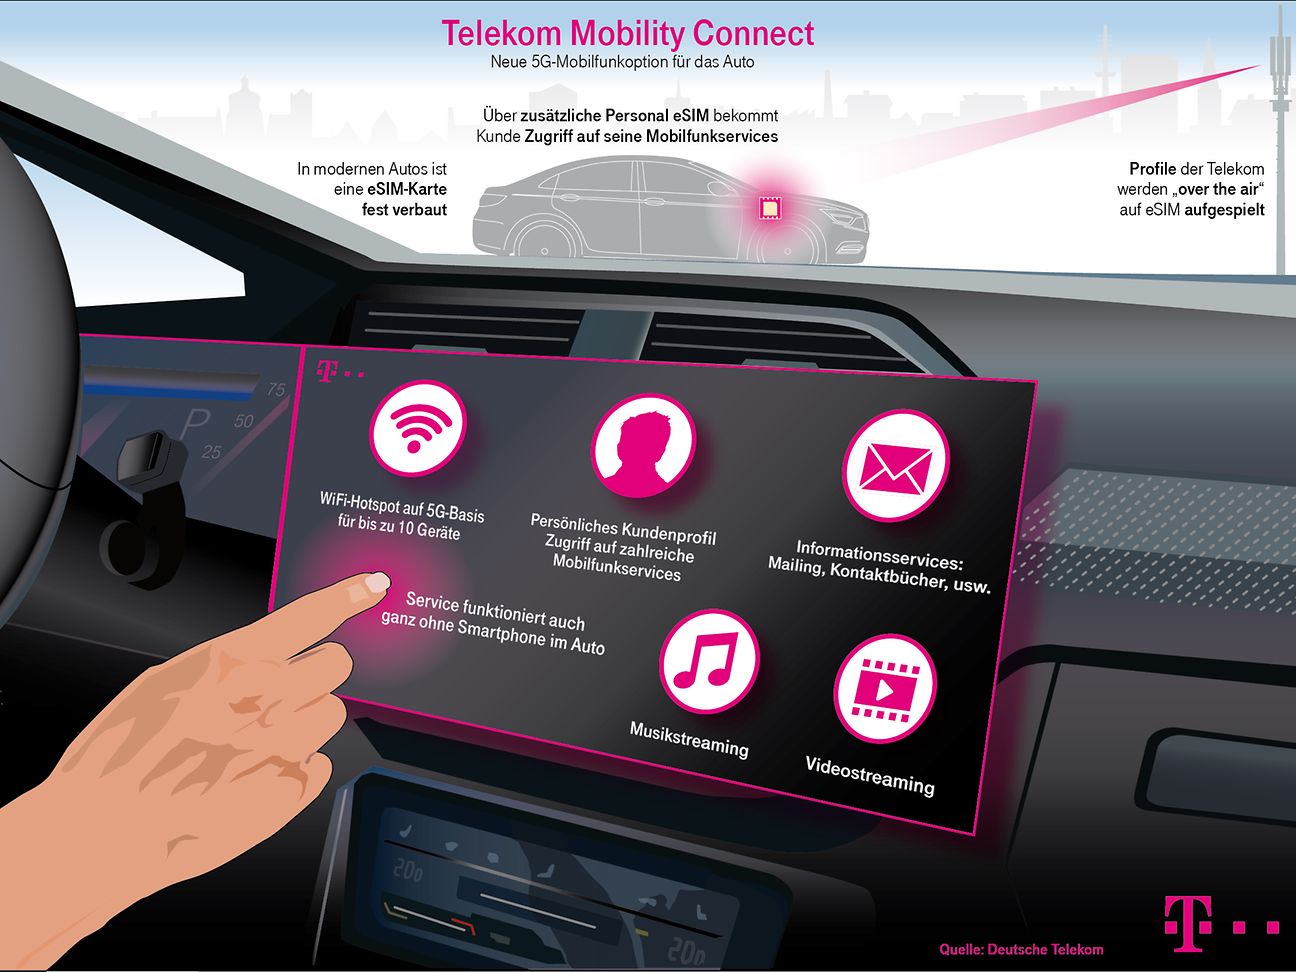 Experience 5G-connectivity in the Telekom Deutsche vehicle 